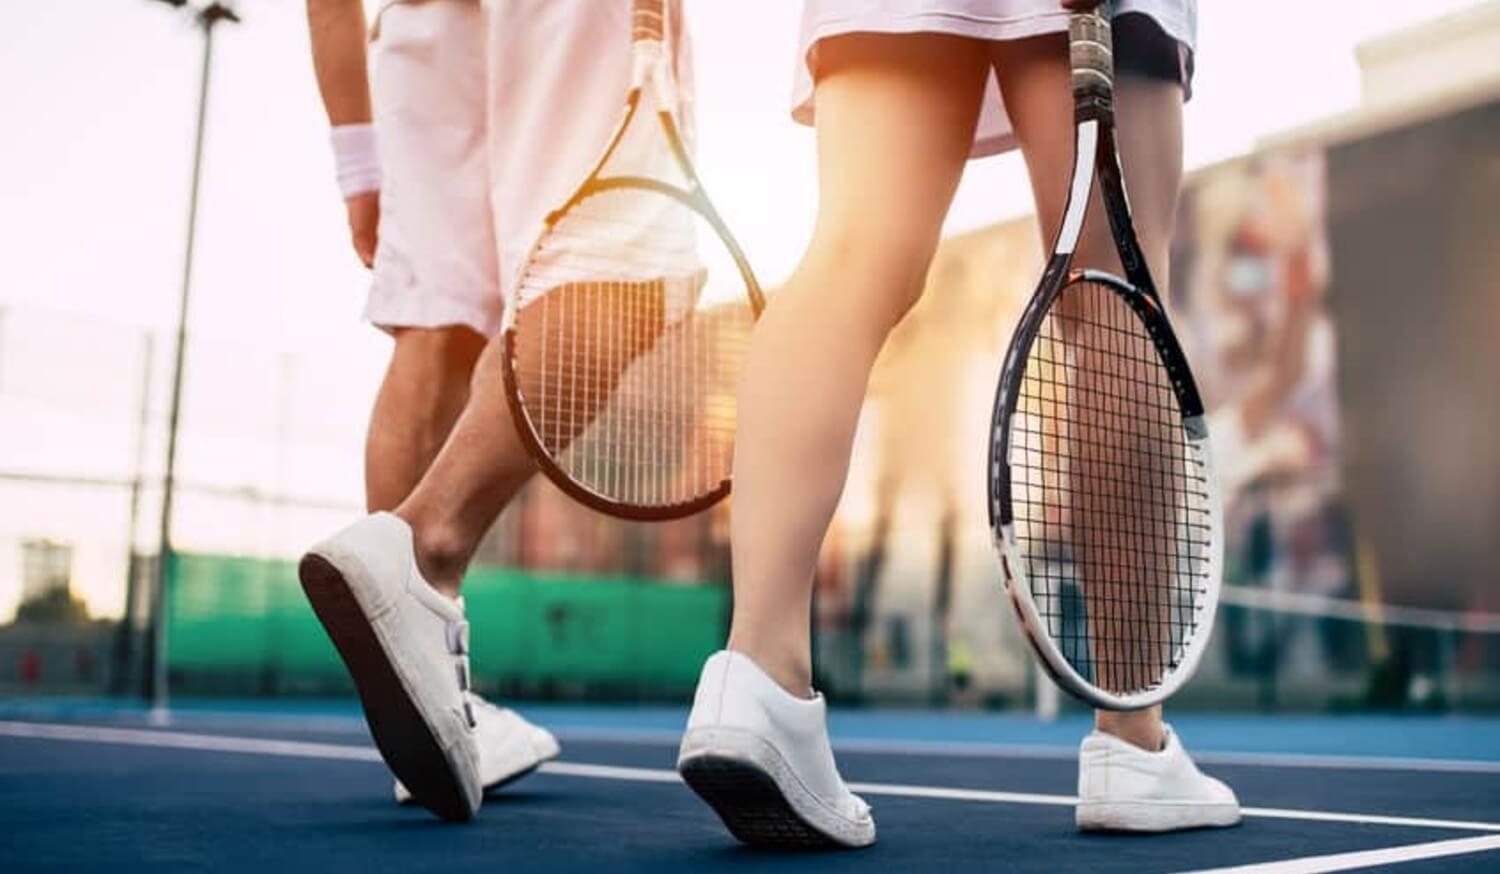 Tennis Surfaces Explained